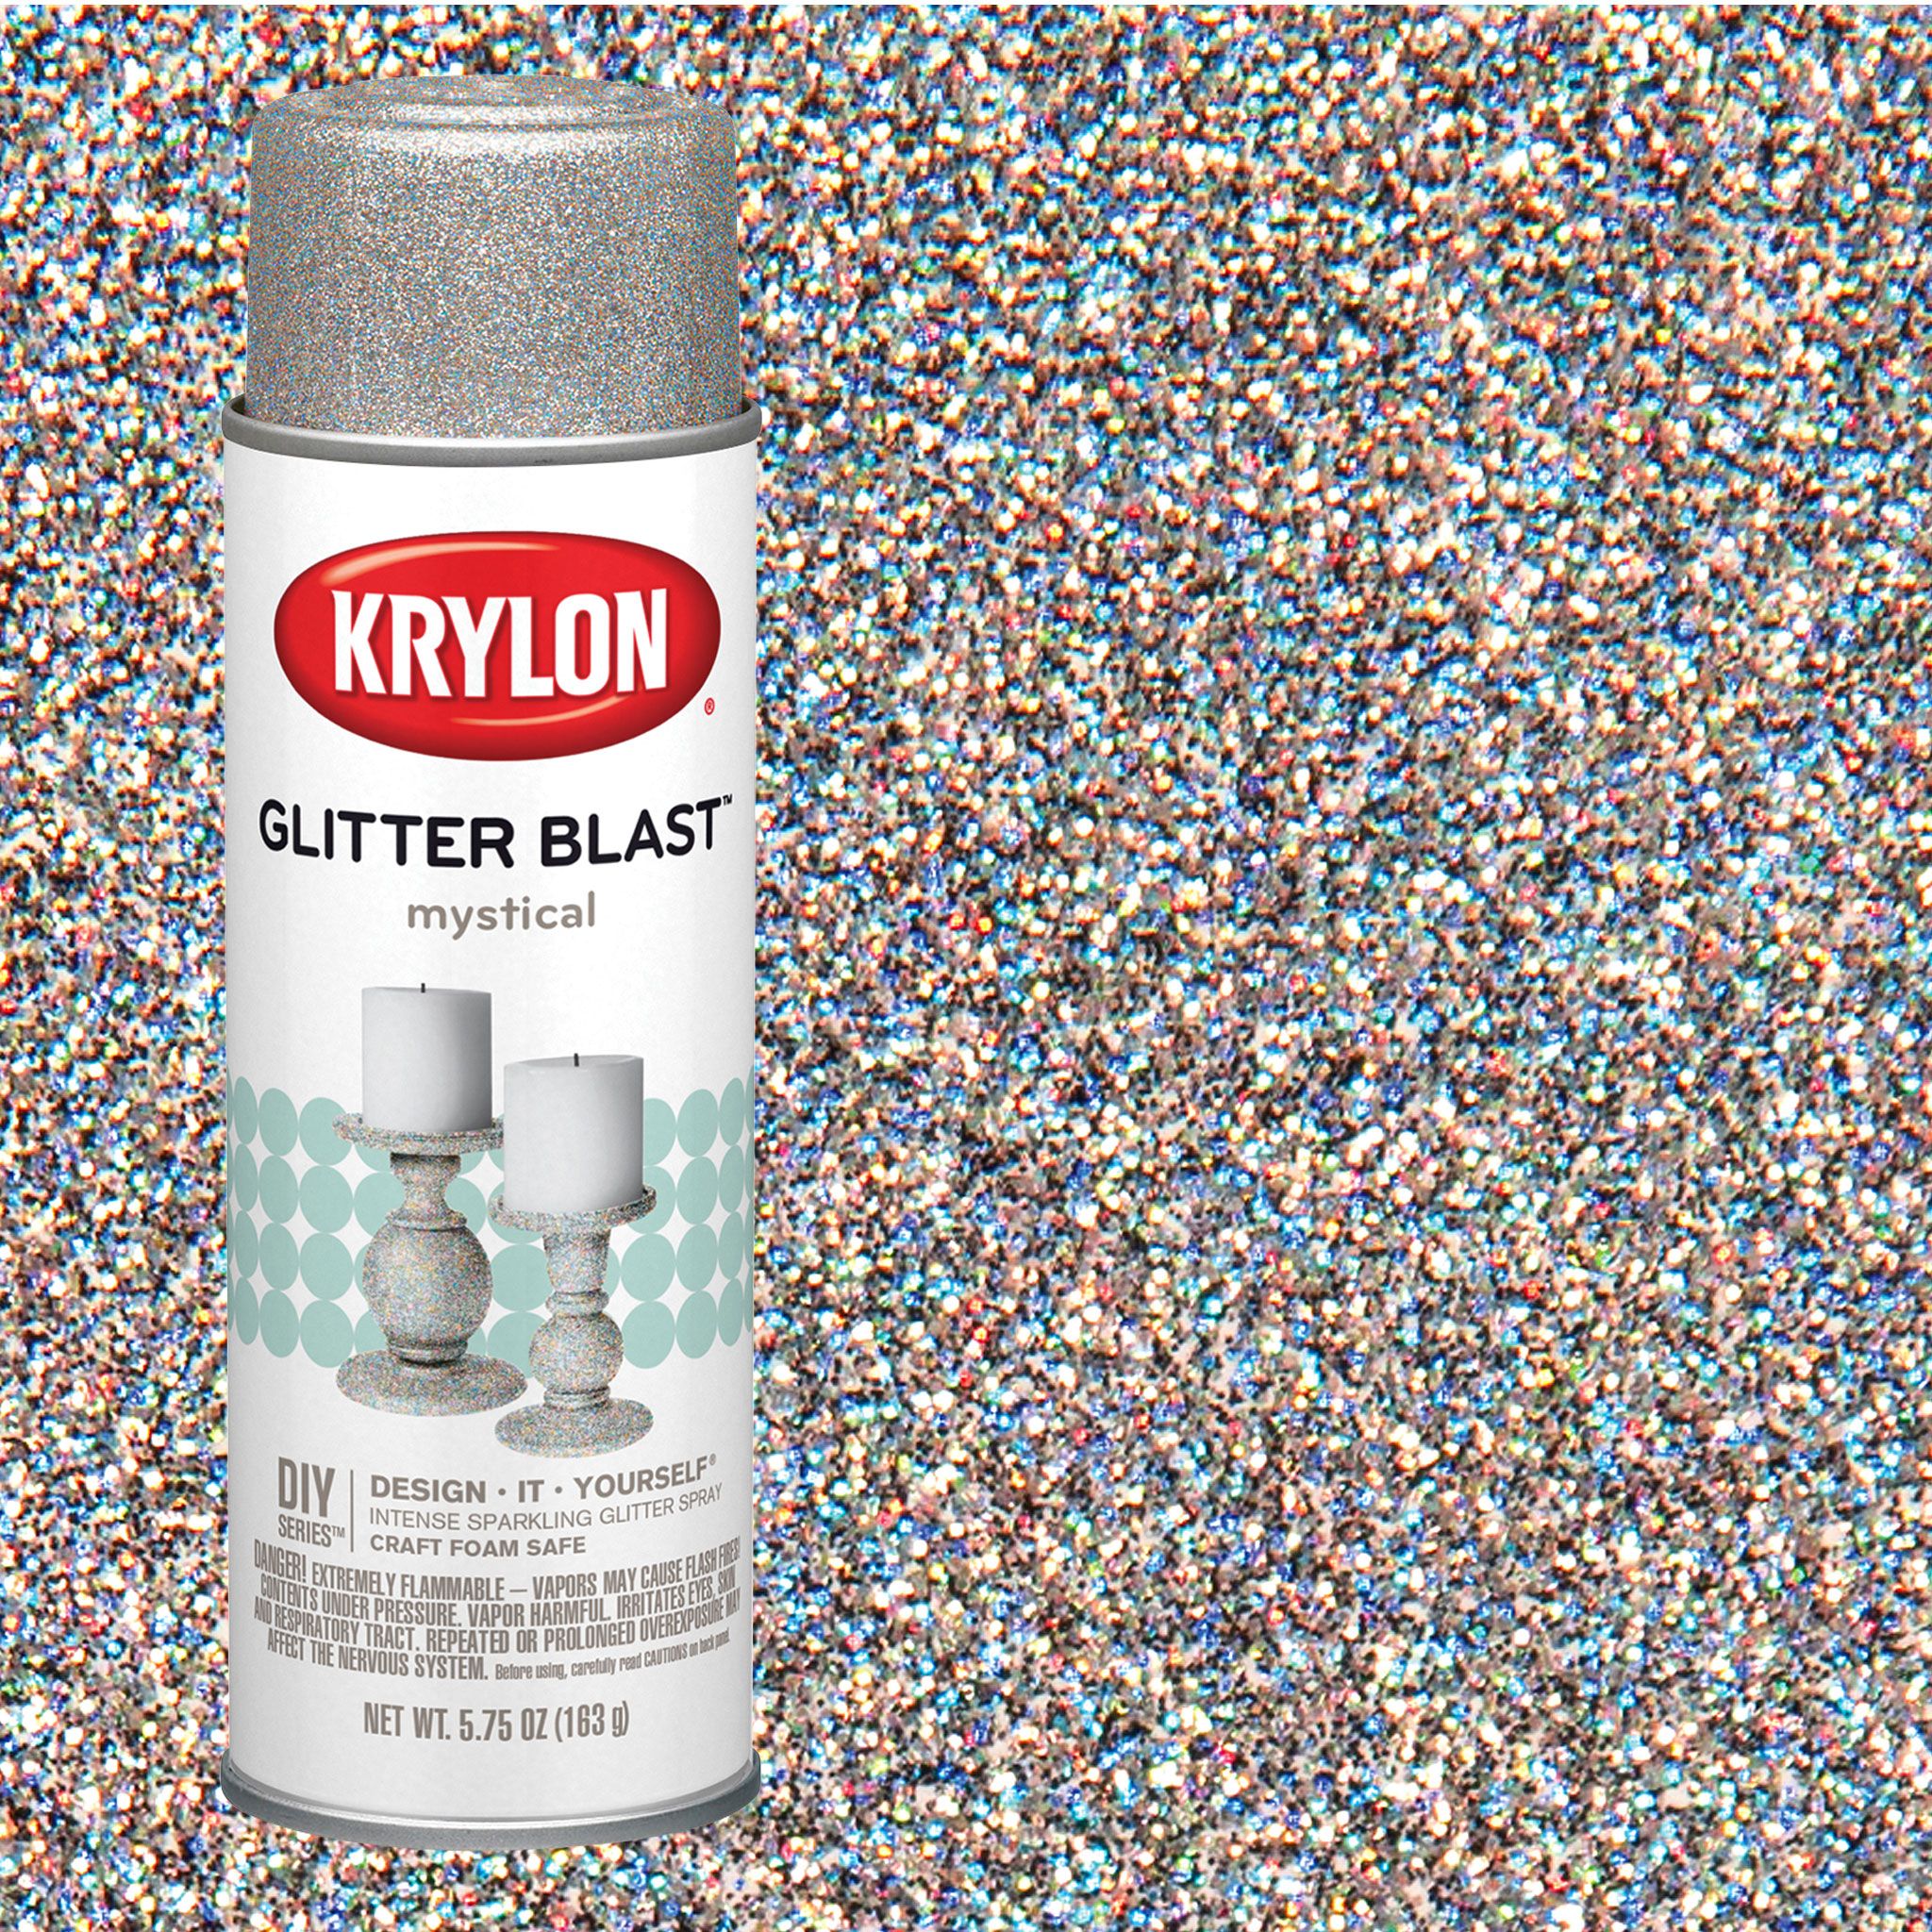 Krylon Glitter Blast Spray Paint - Mystical, 5.75 oz